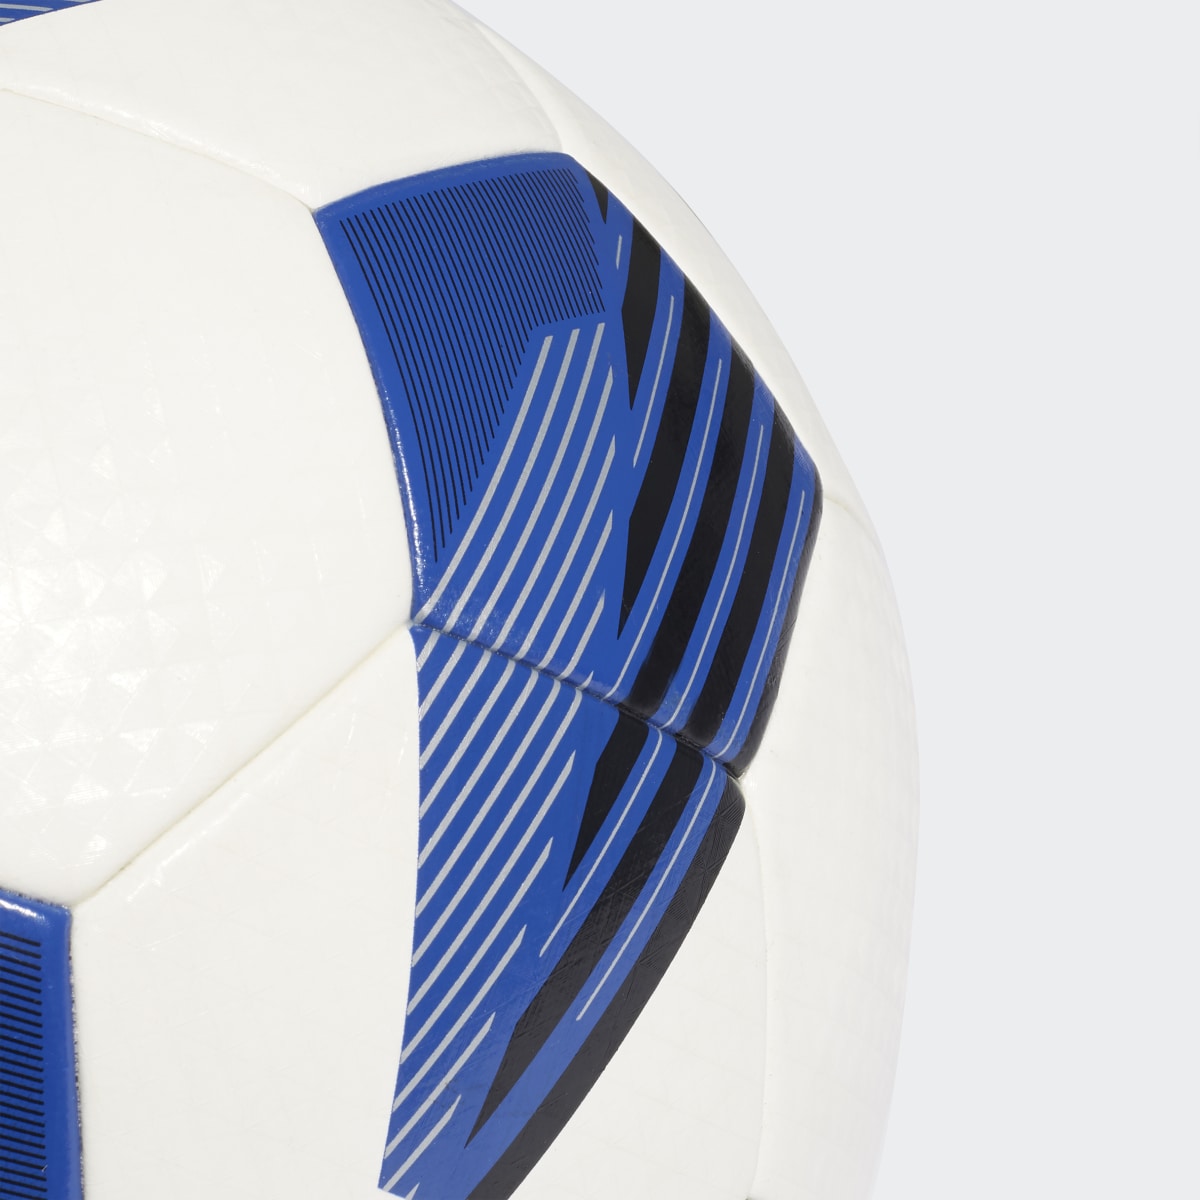 Adidas Bola Tiro League – Piso sintético. 6